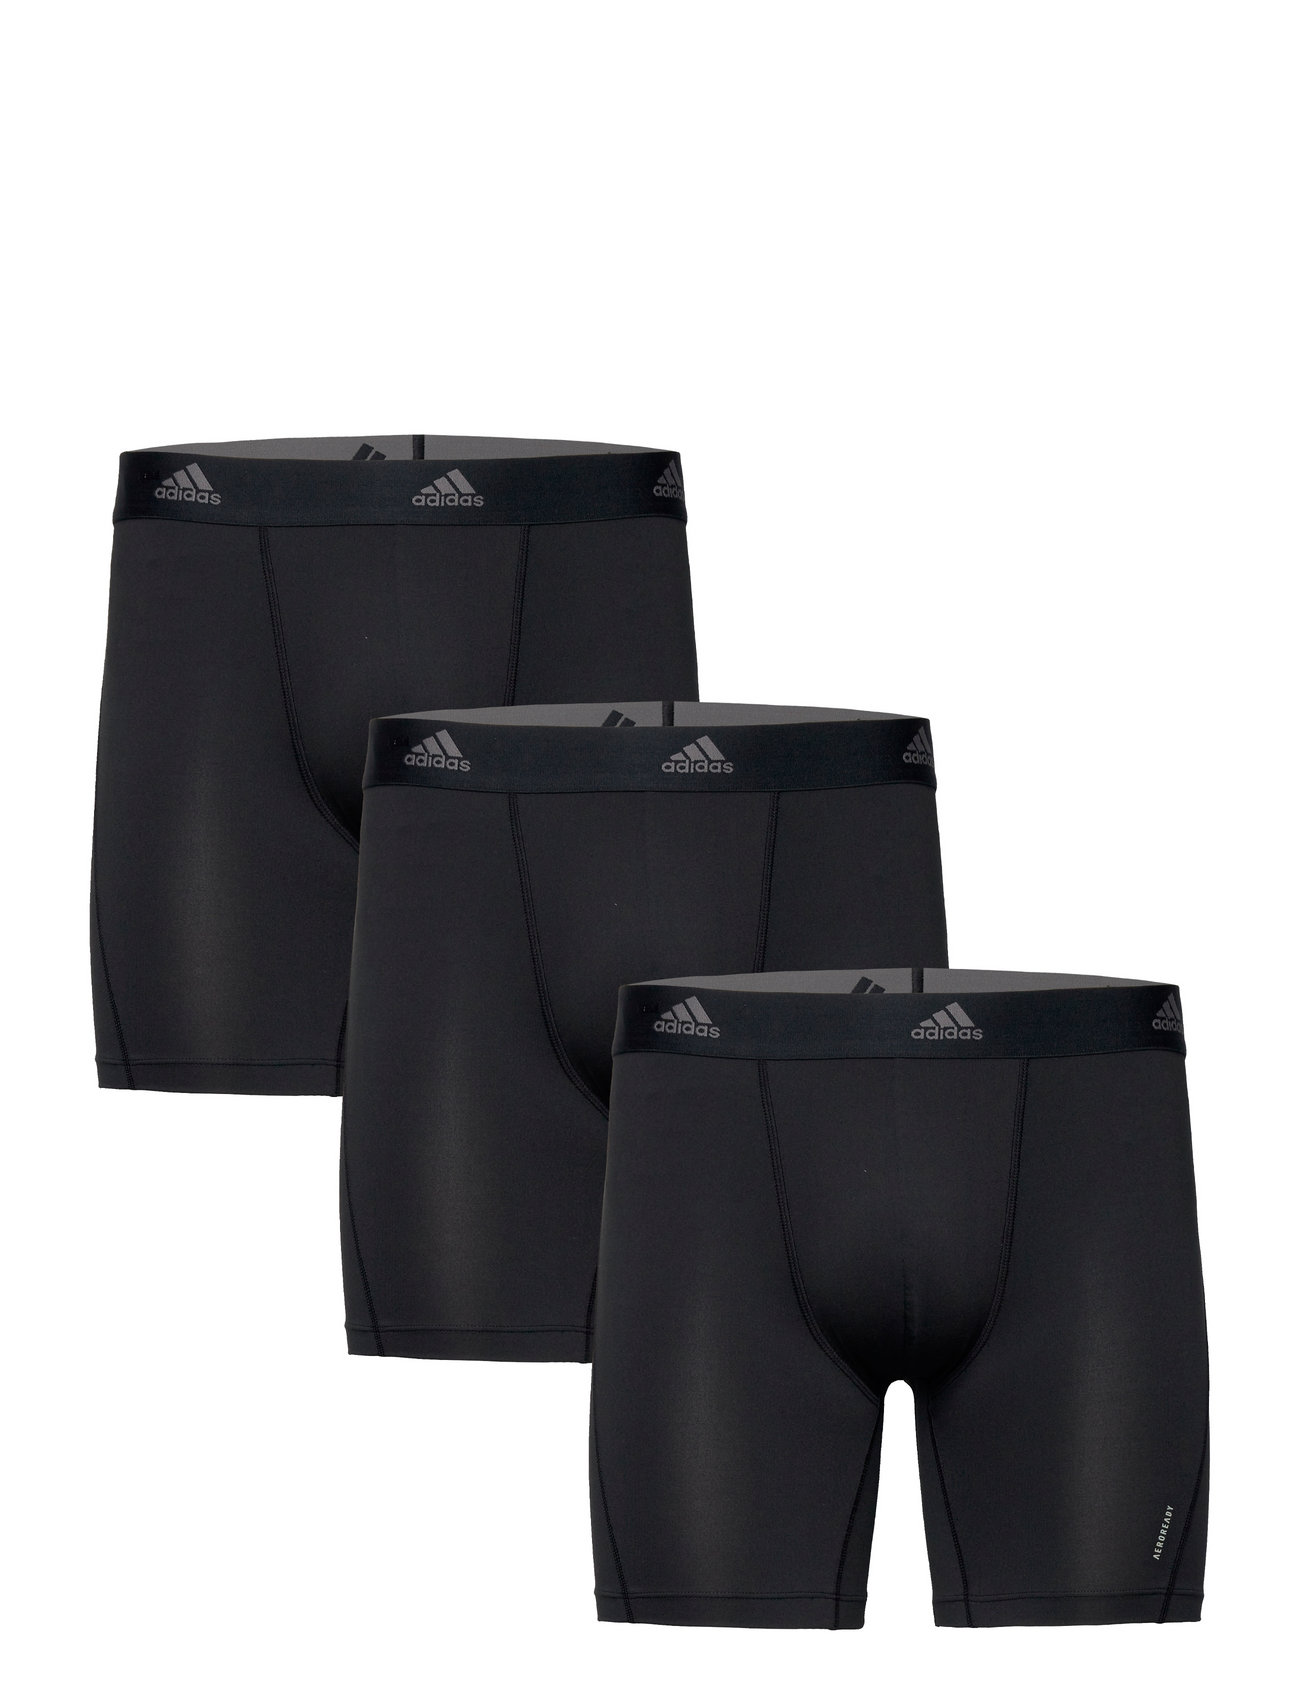 Afskedigelse Due Op adidas Underwear Shorts - Boxers | Boozt.com